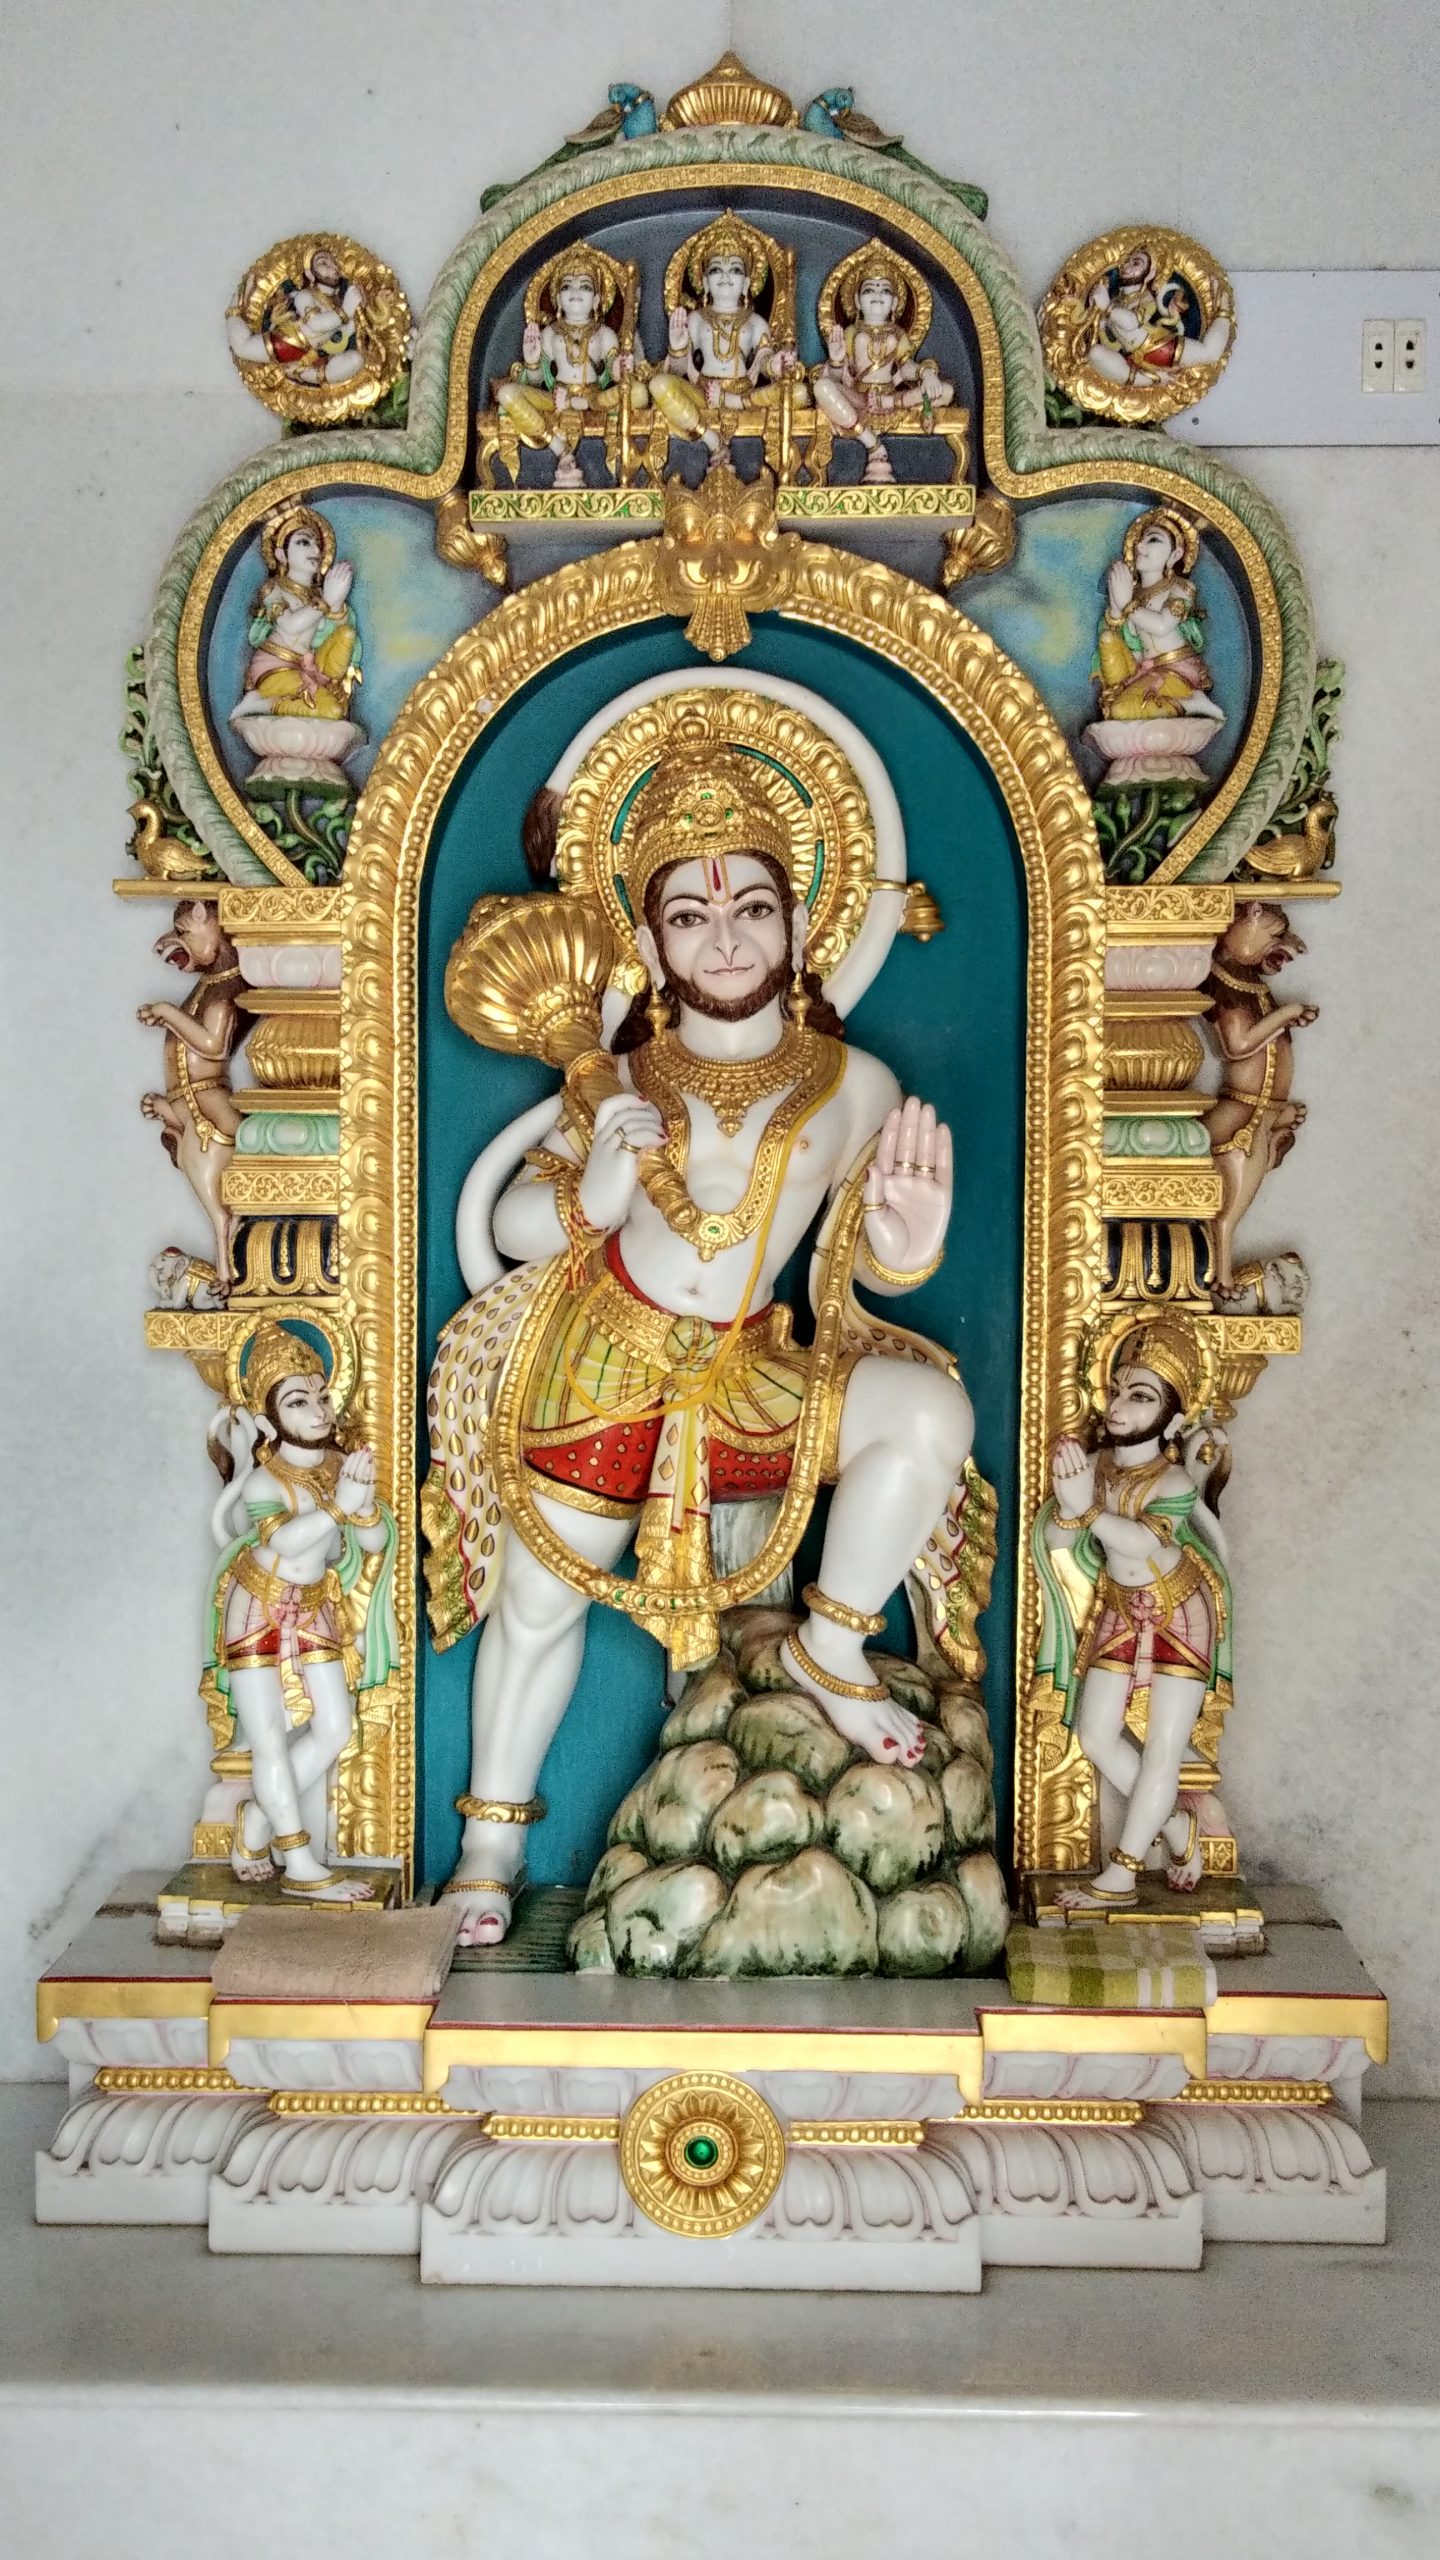 Sculpture of Lord Hanuman